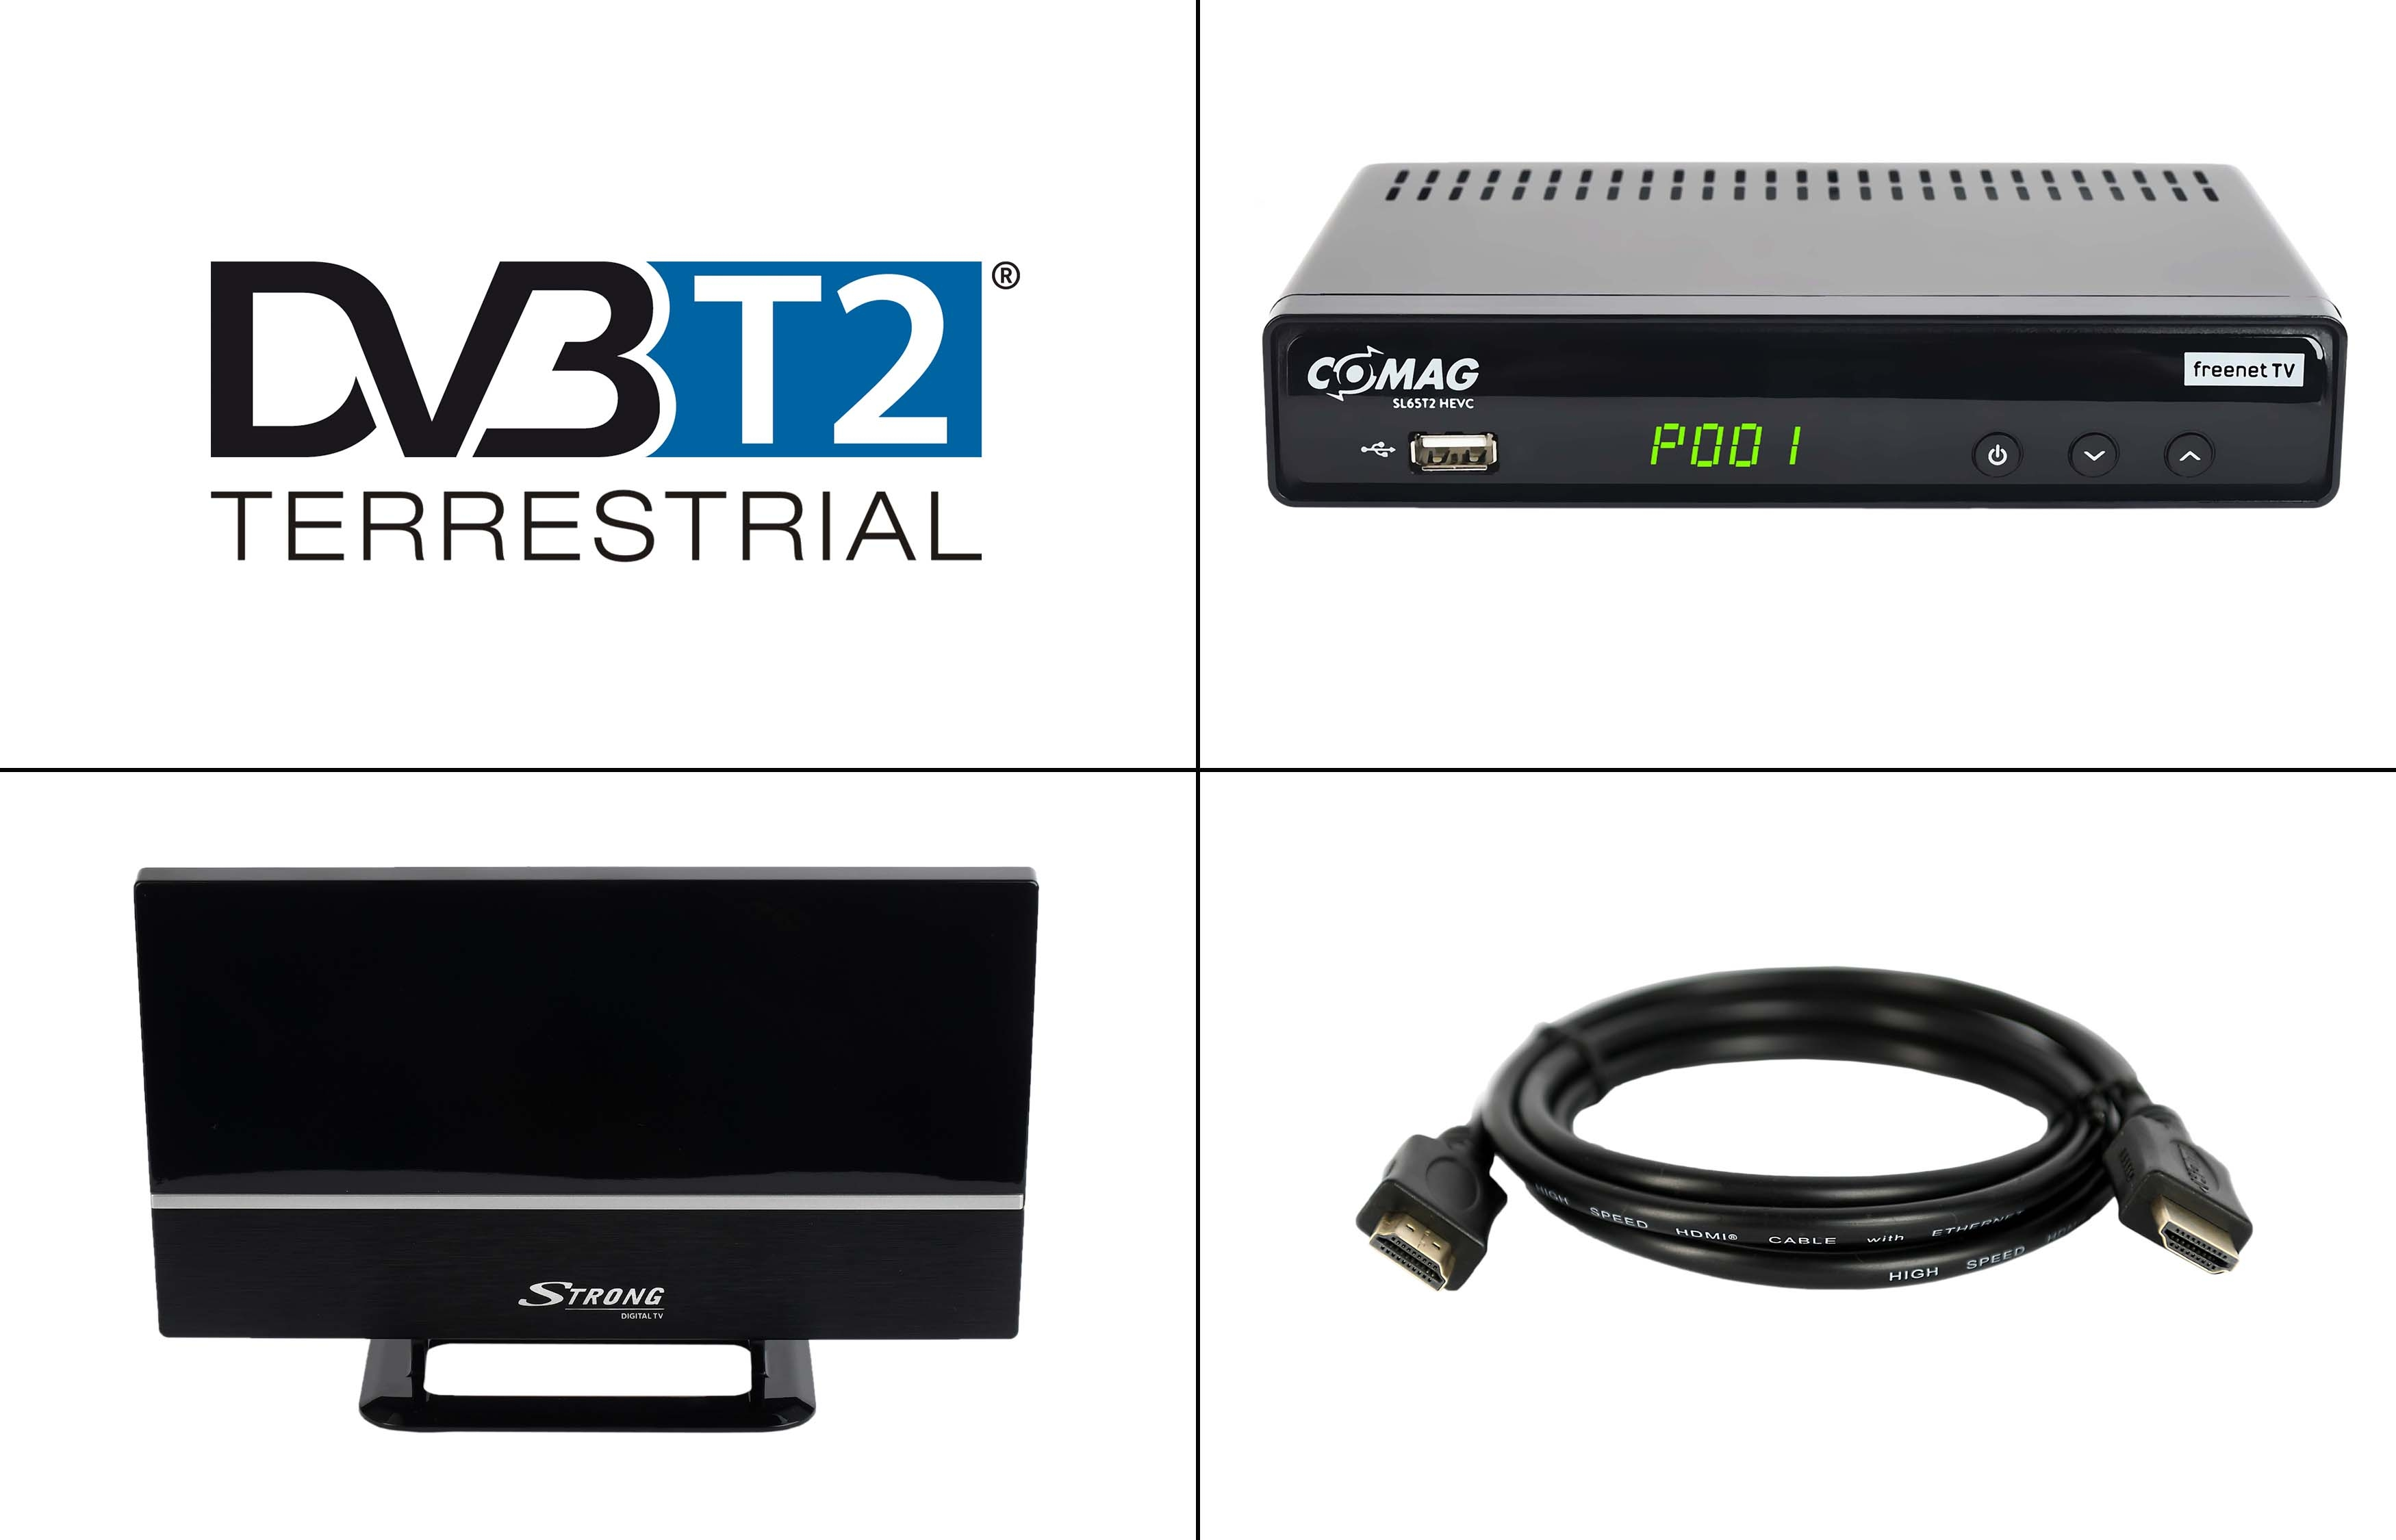 COMAG SL65T2 Home Bundel DVB-T-Receiver DVB-T2 (HDTV, (H.265), DVB-T2 schwarz) PVR-Funktion, DVB-T, (H.264)